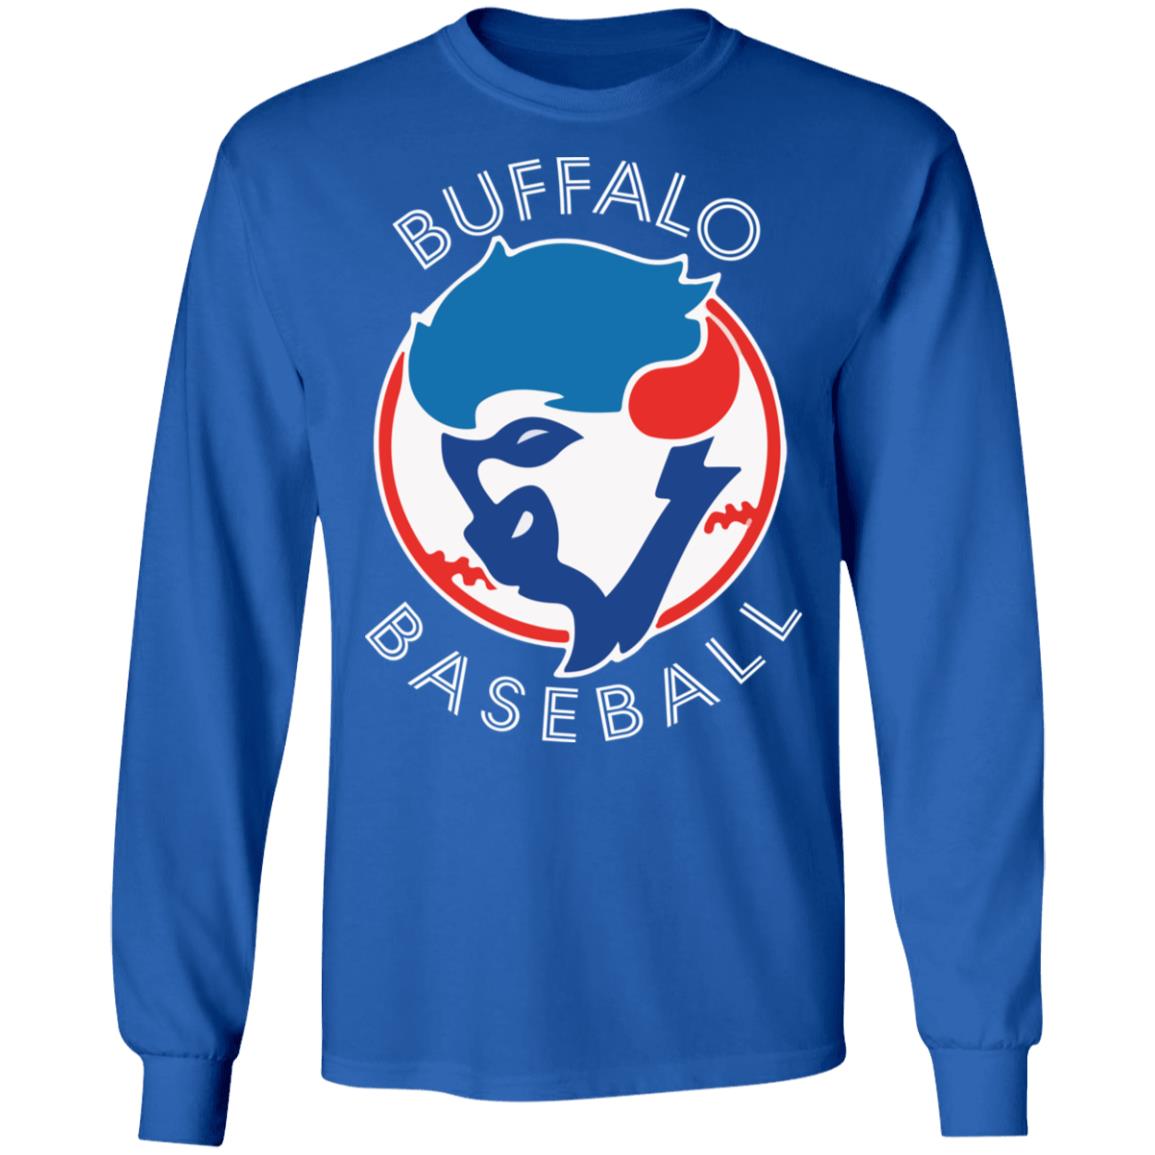 buffalo blue jays shirt